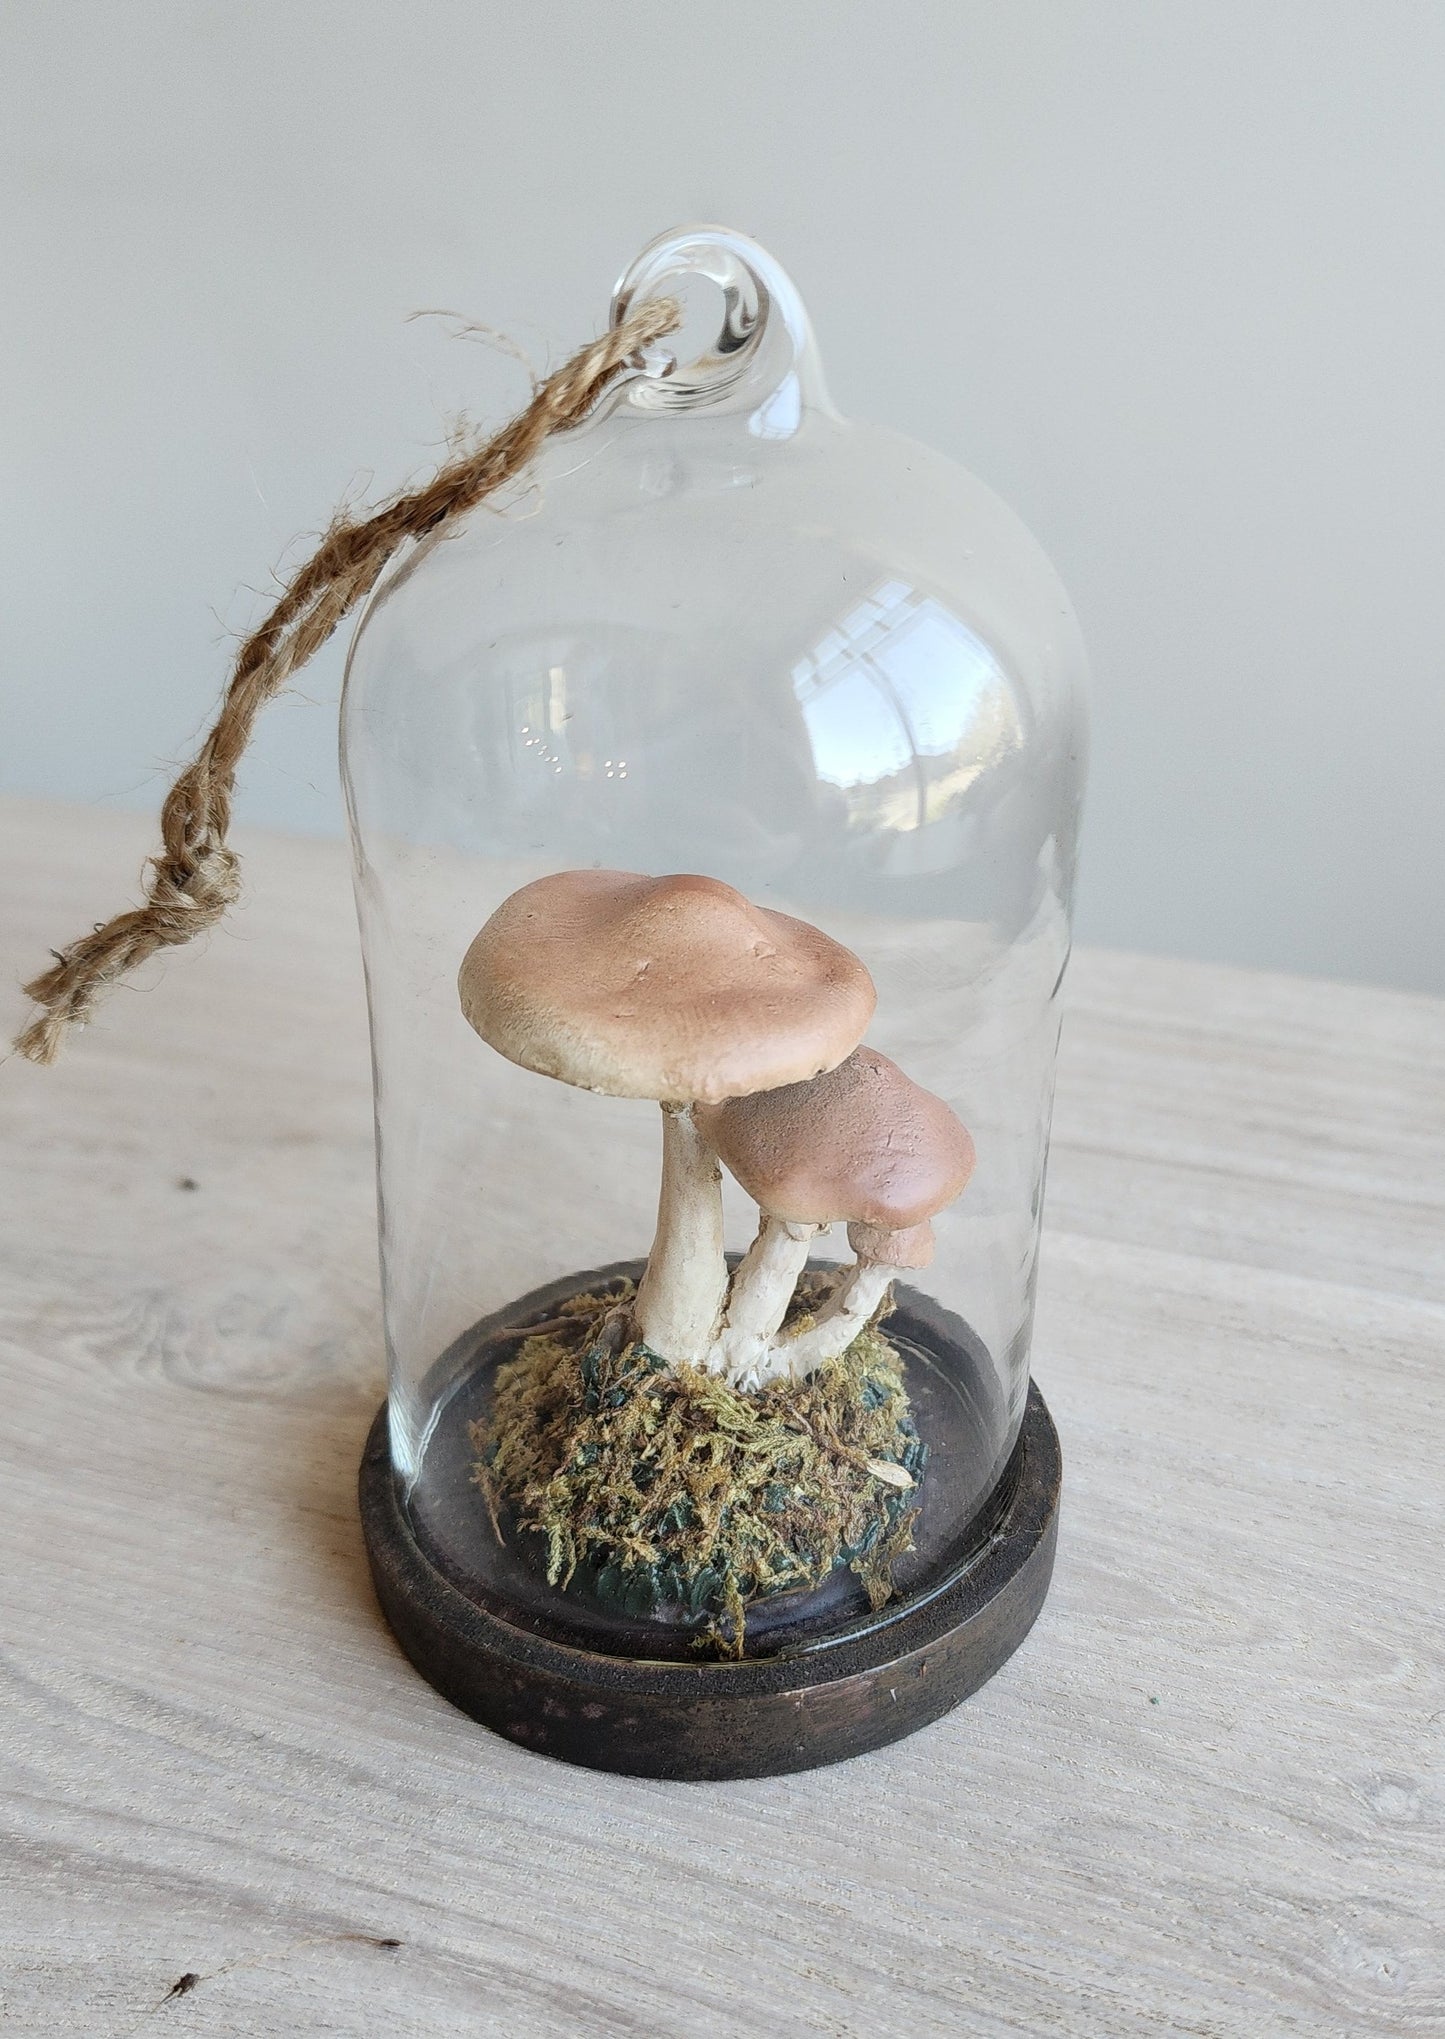 Glass Cloche Mushroom Ornament